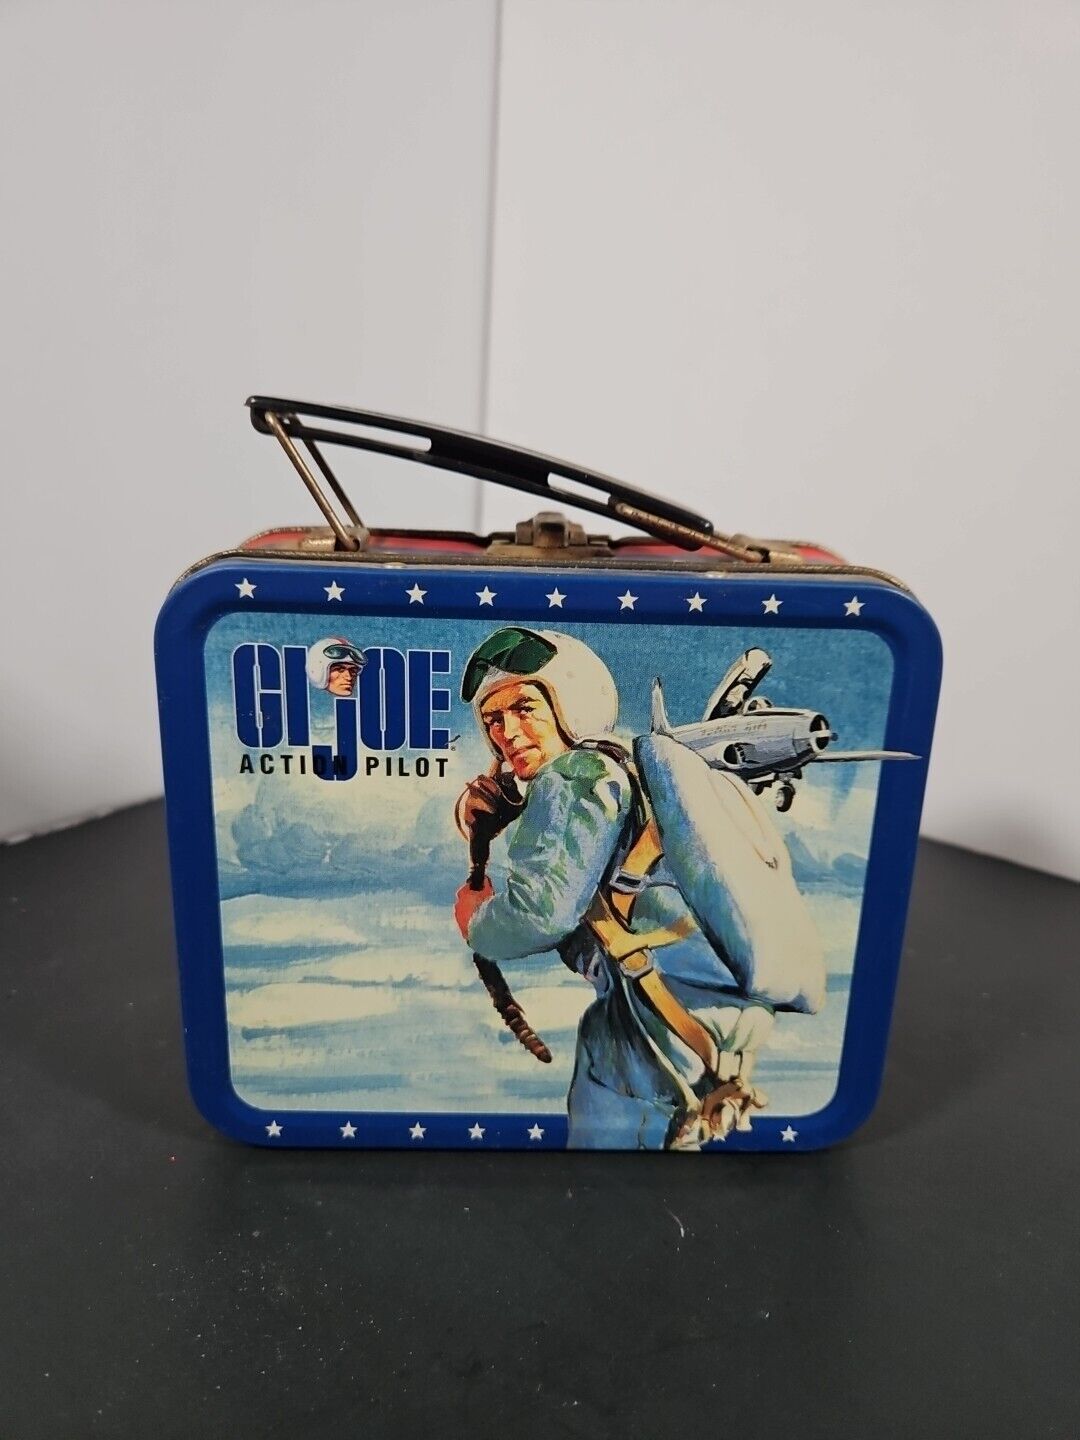 Vintage GI Joe Action Pilot Metal Lunch Box - Air Force Fighter Pilot